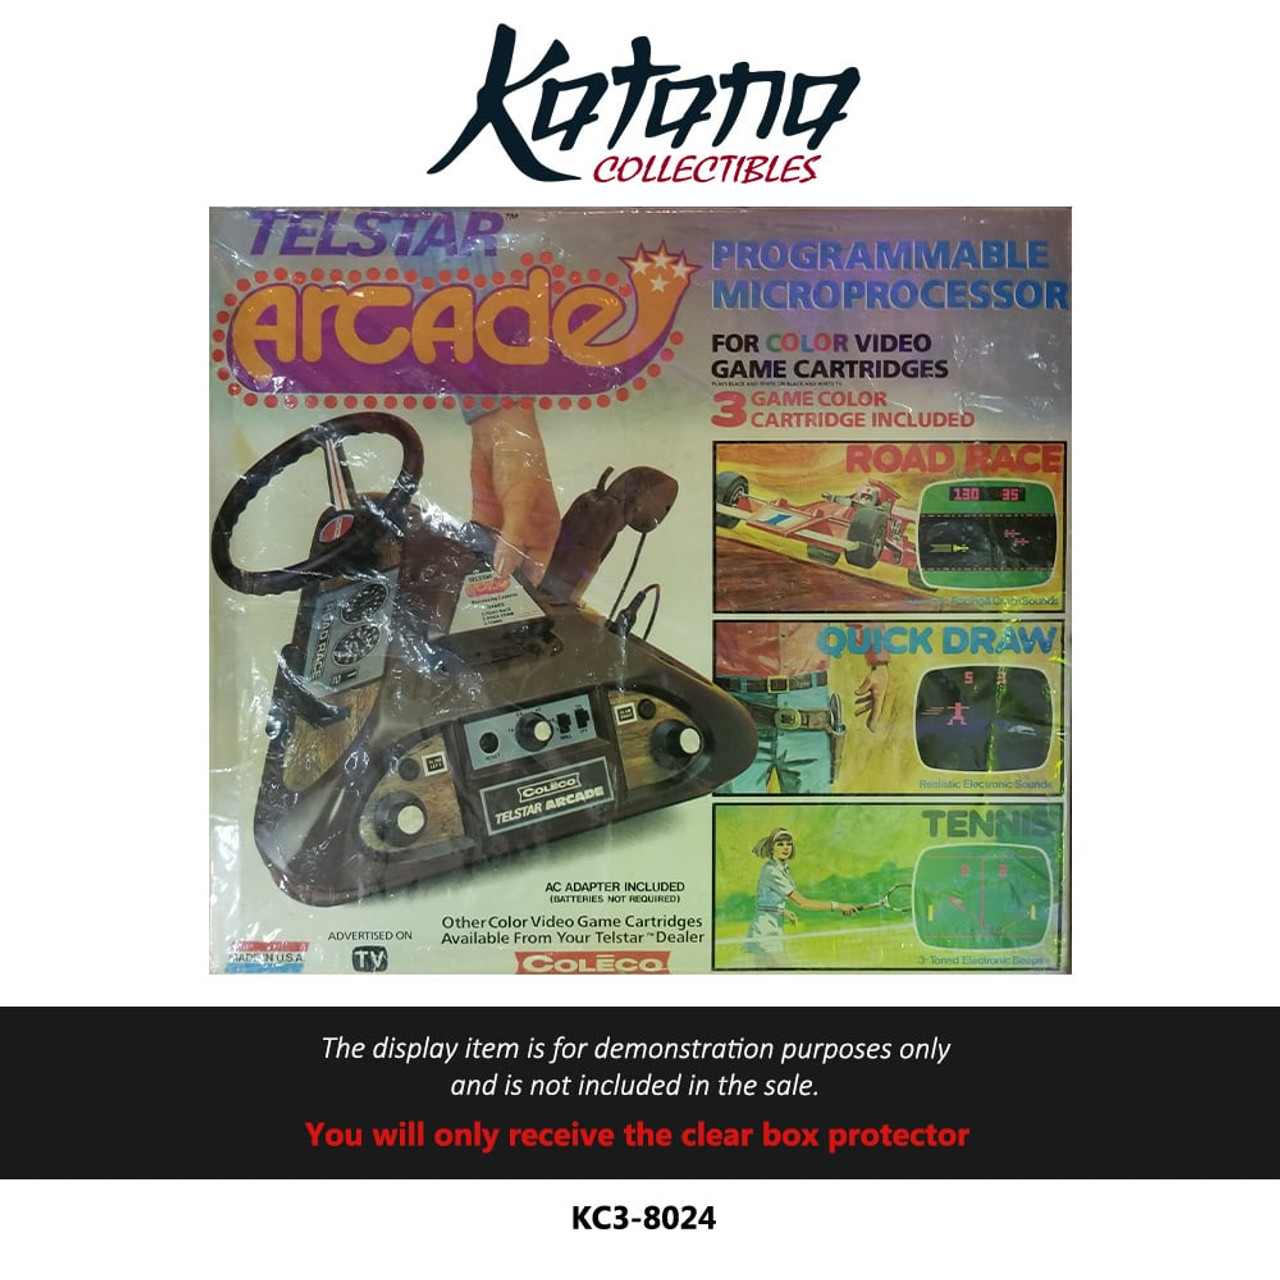 Katana Collectibles Protector For Coleco Telstar Arcade Programmable Microprocessor Console